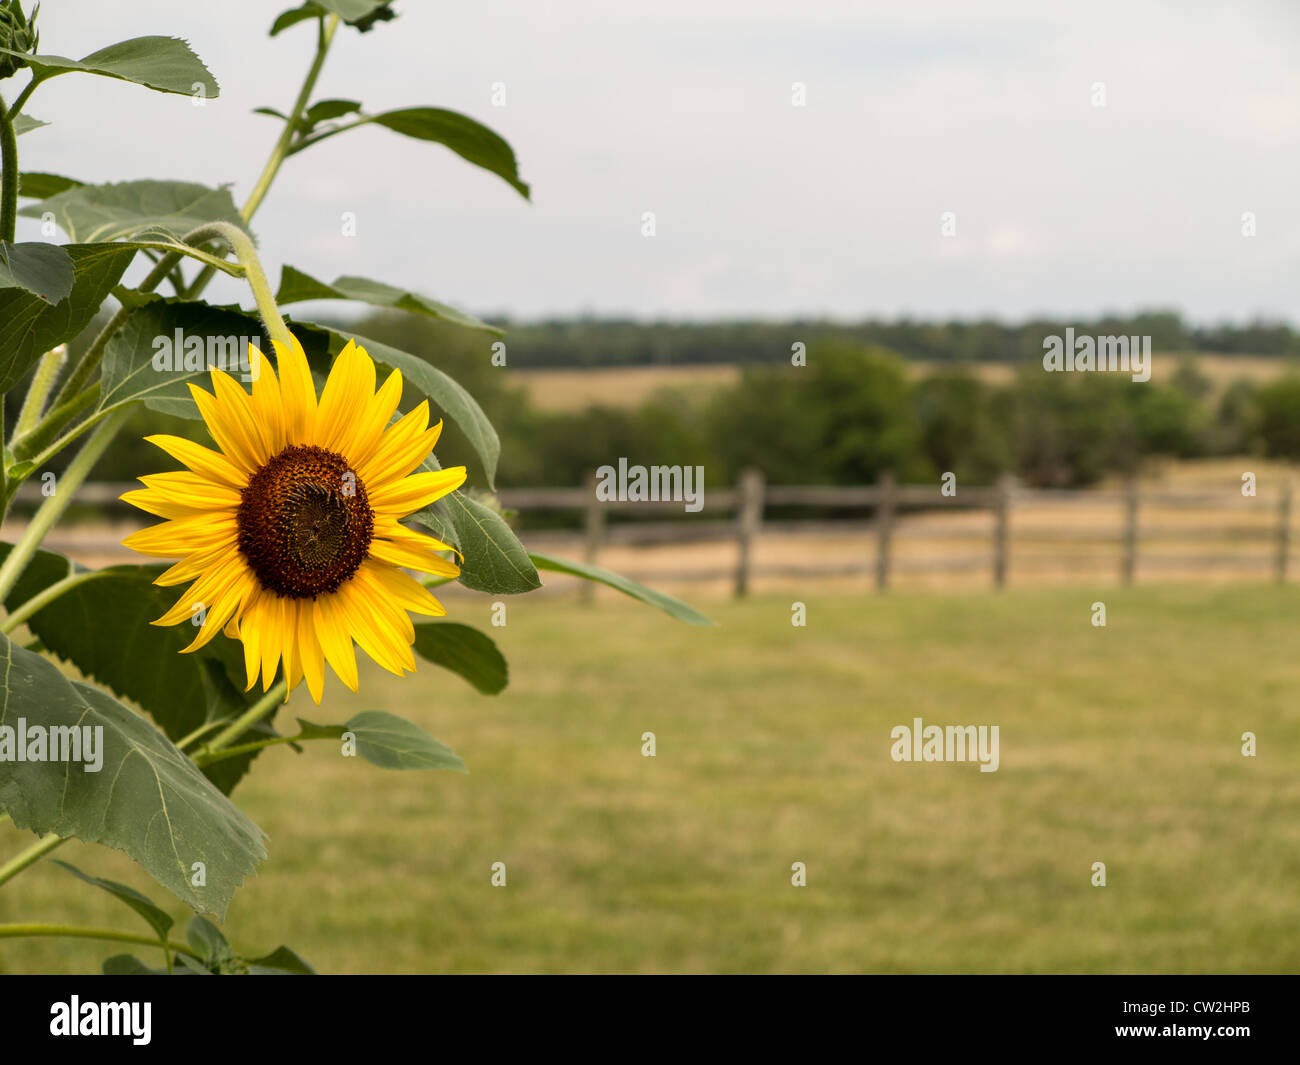 Close up sun flower con una scena rurale di prati e di recinzione in background Foto Stock